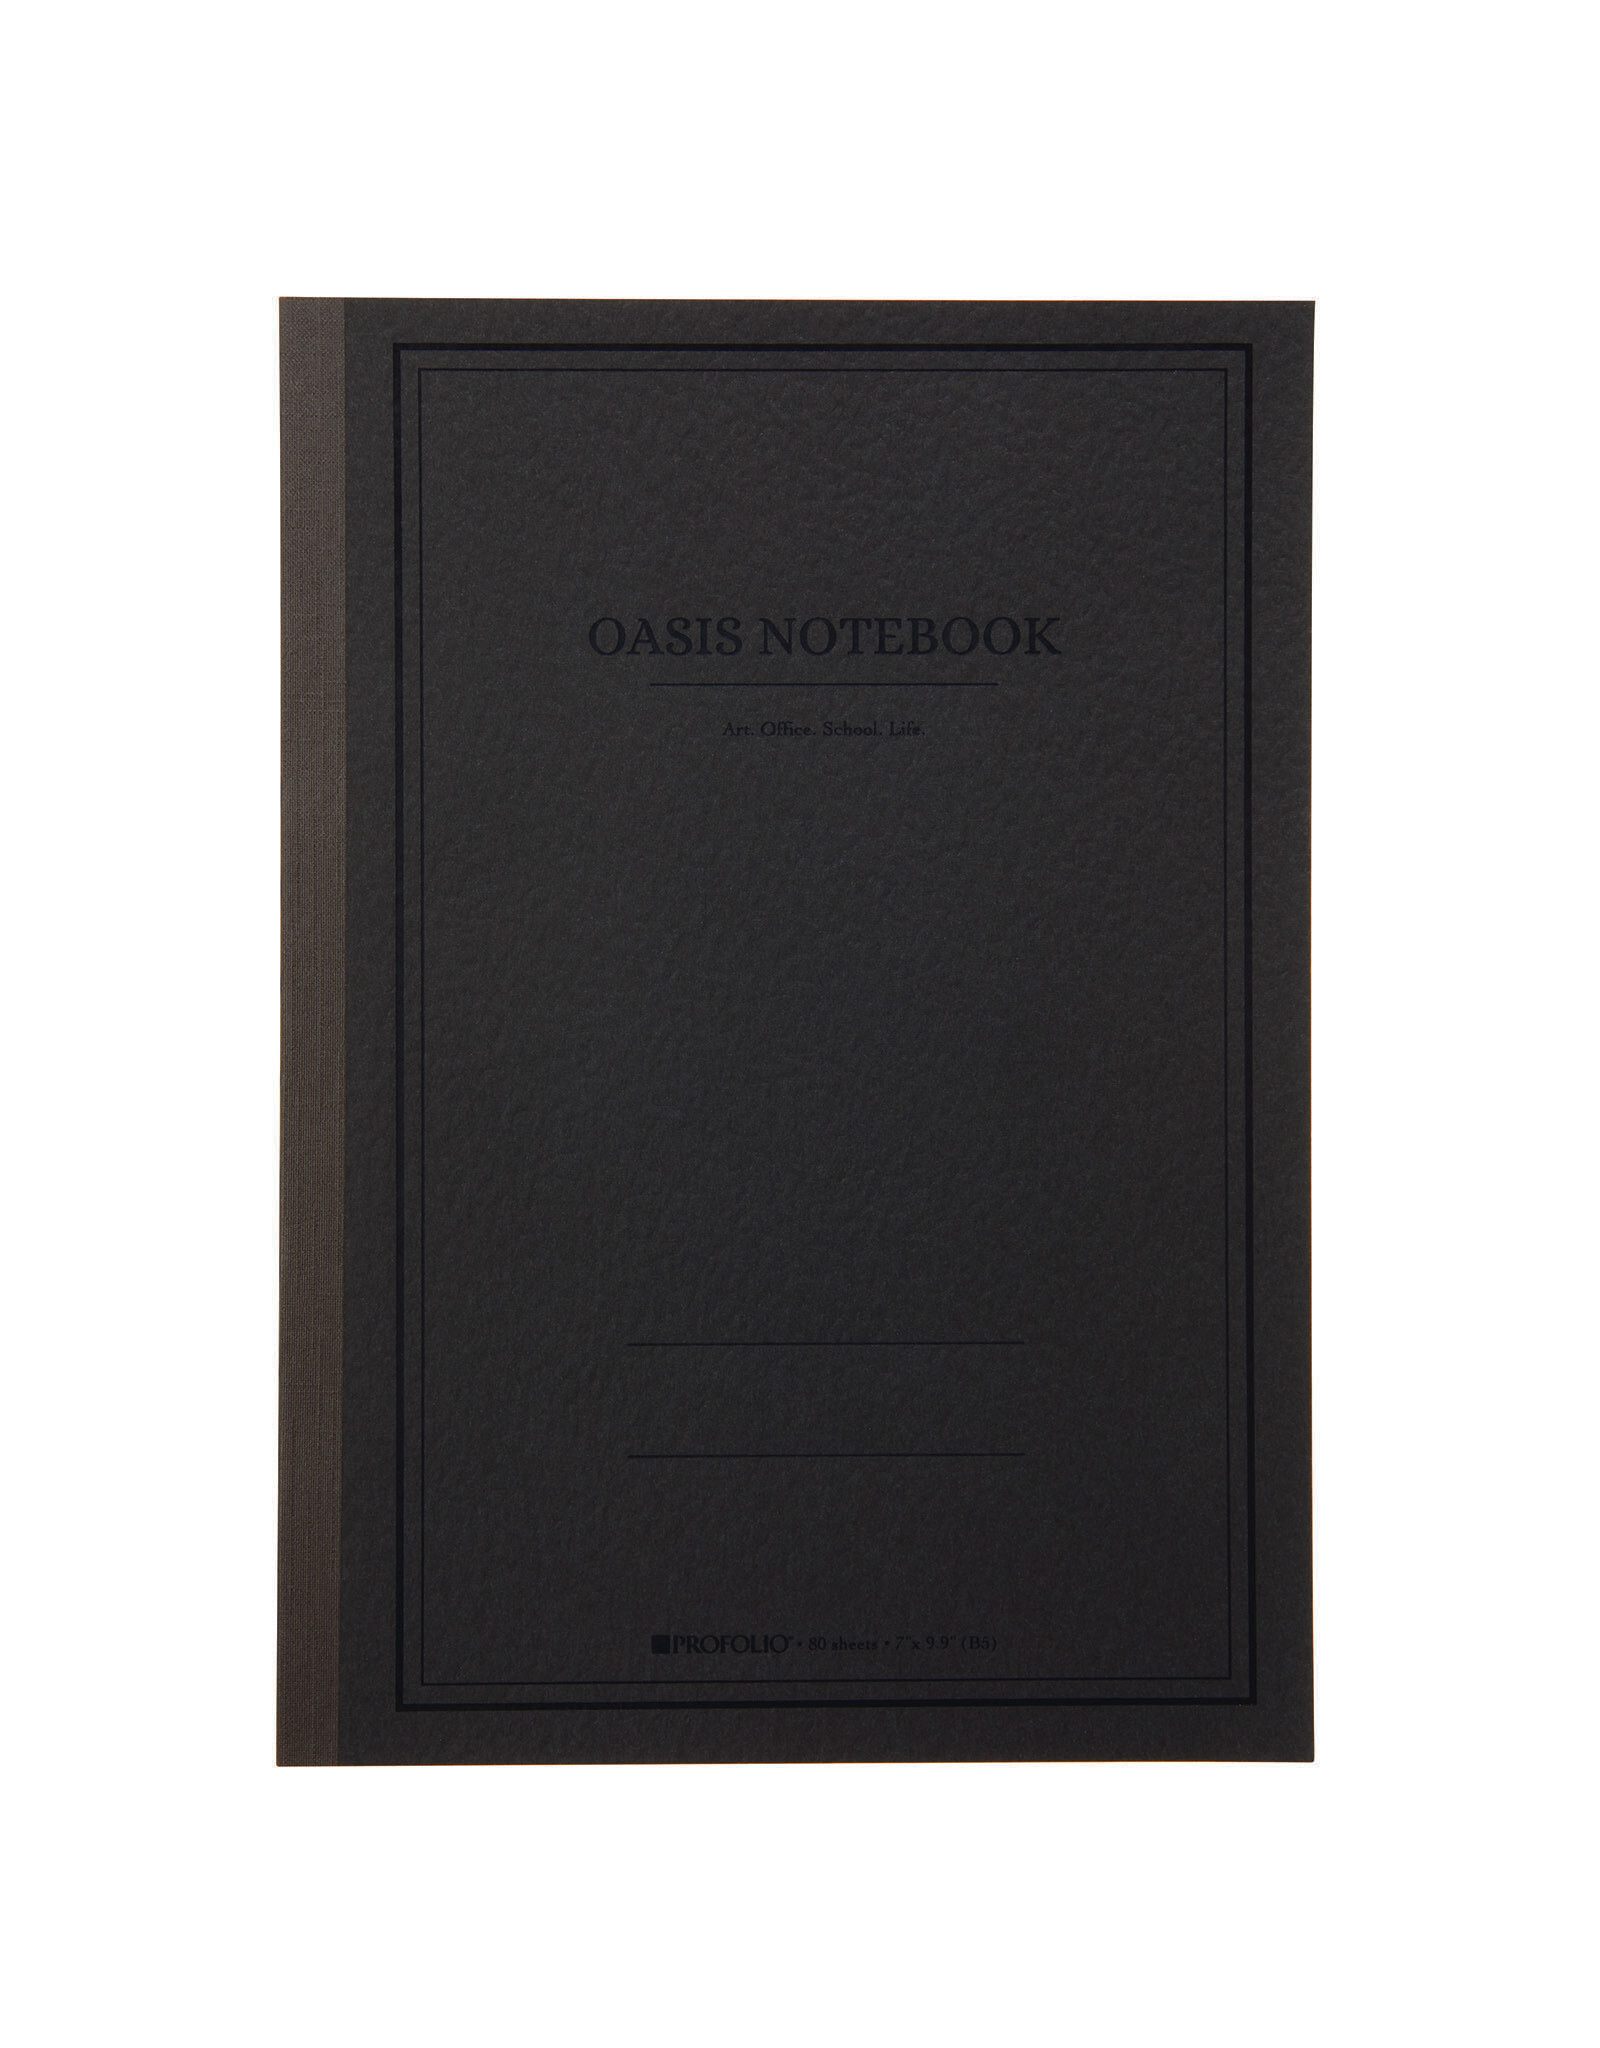 ITOYA Profolio Oasis Notebook, Charcoal, B5 (6.9” x 9.8”)